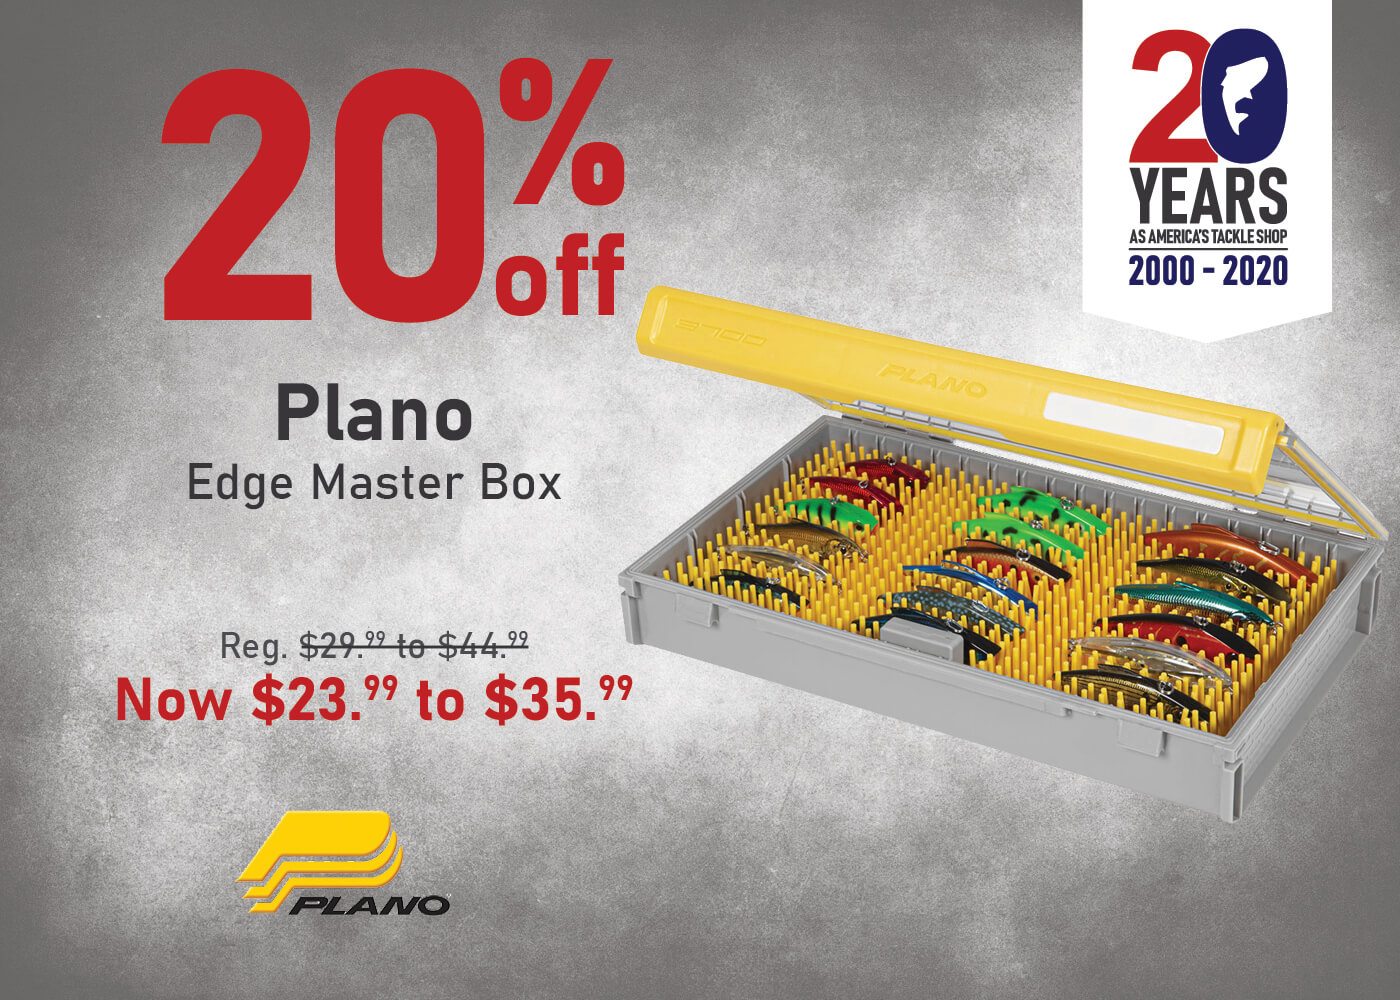 Save 20% on the Plano Edge Master Box